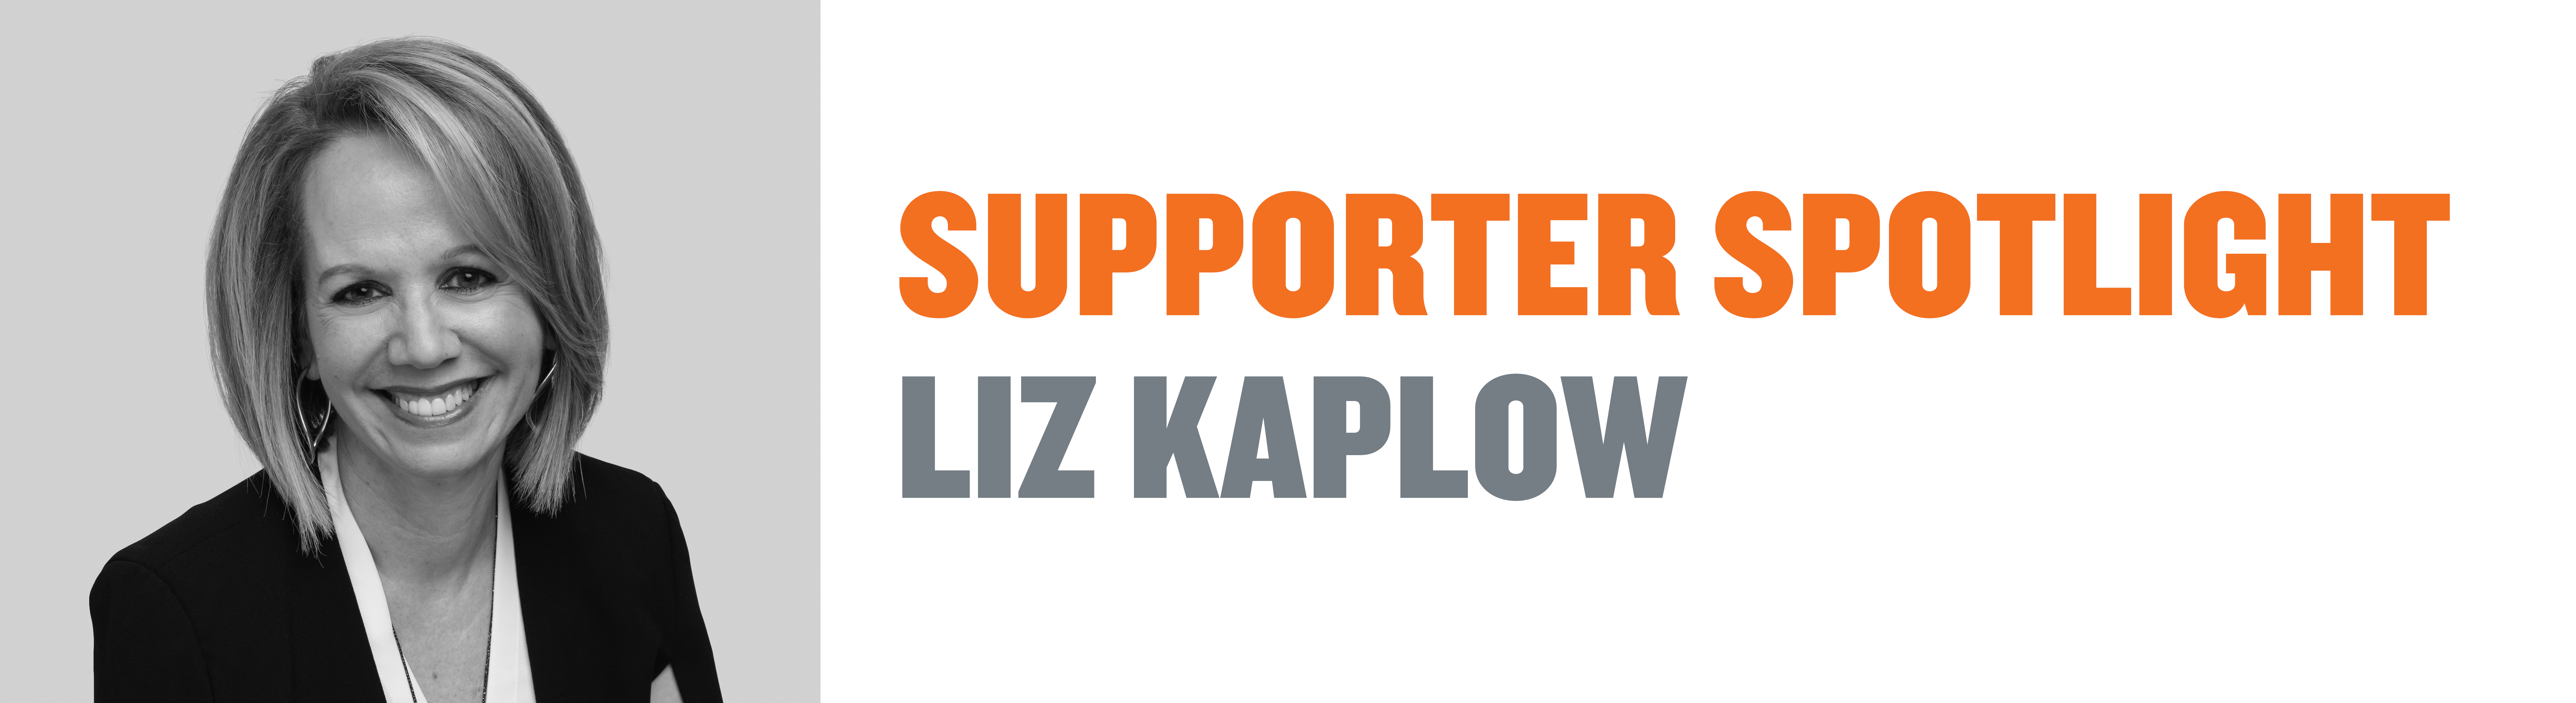 Lix Kaplow Supporter Spotlight